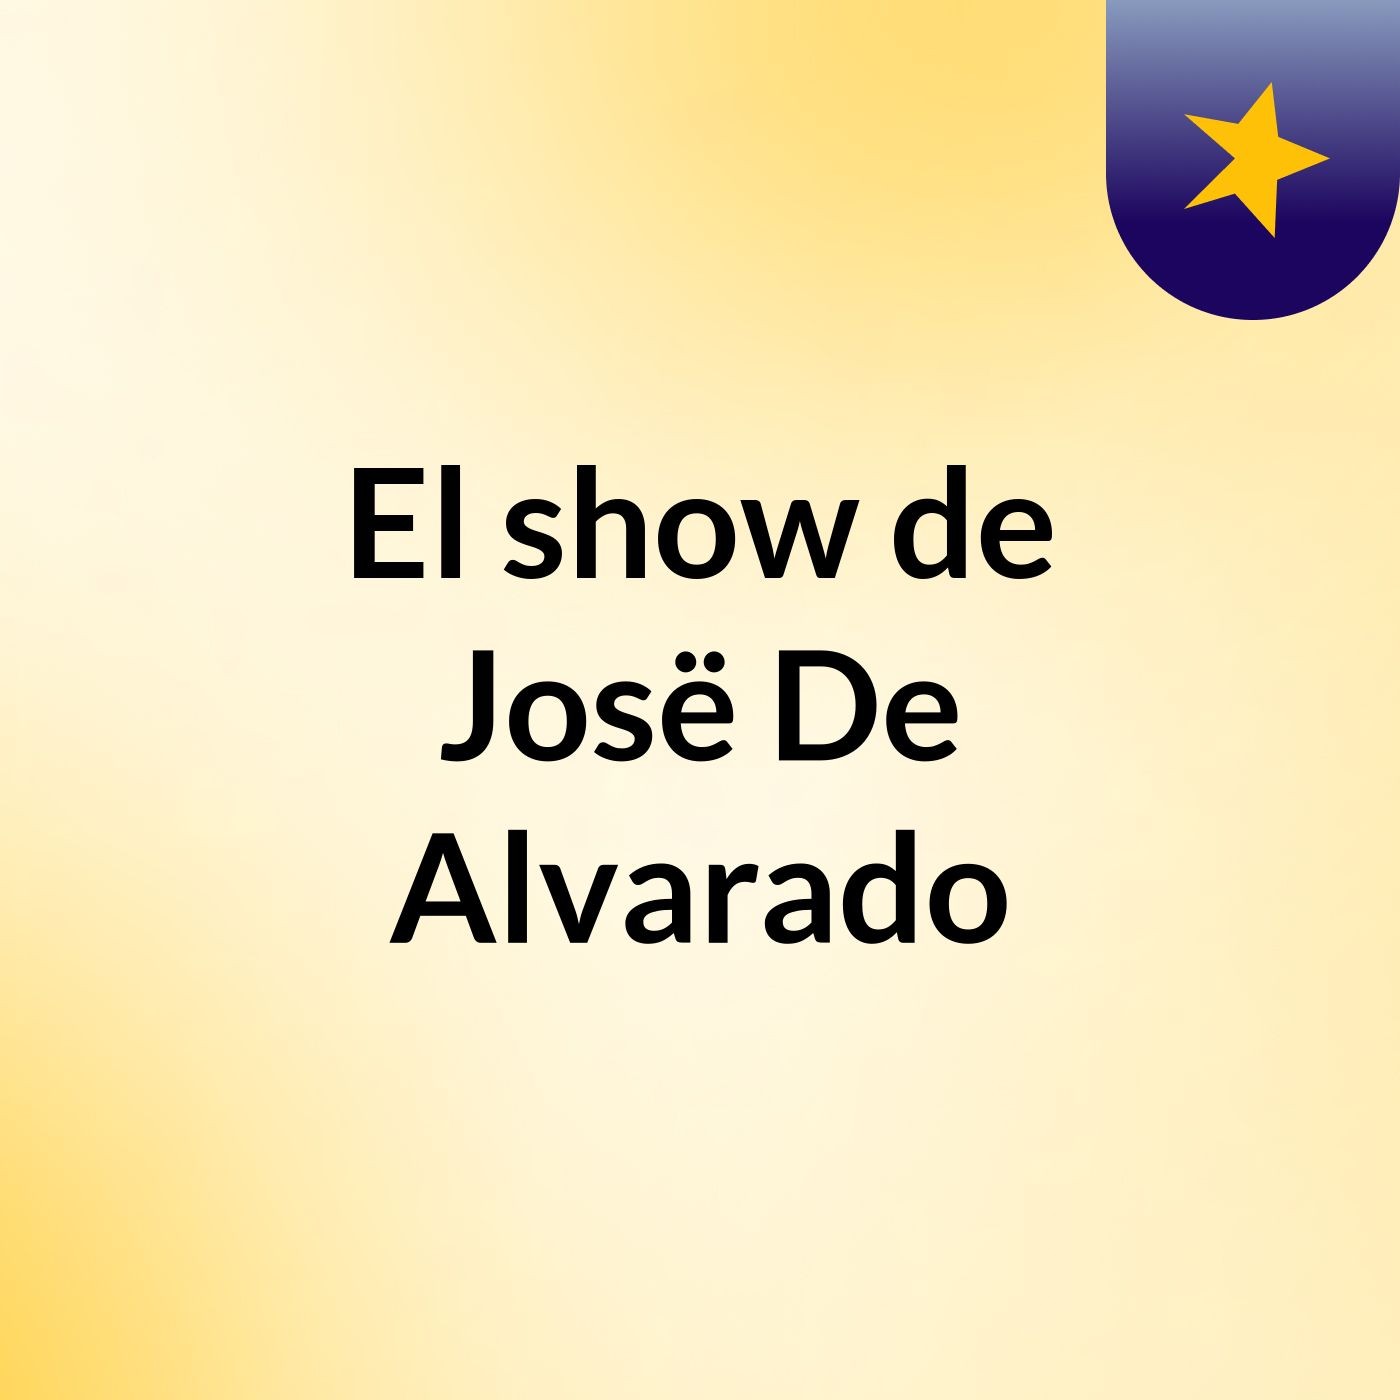 El show de Josë De Alvarado